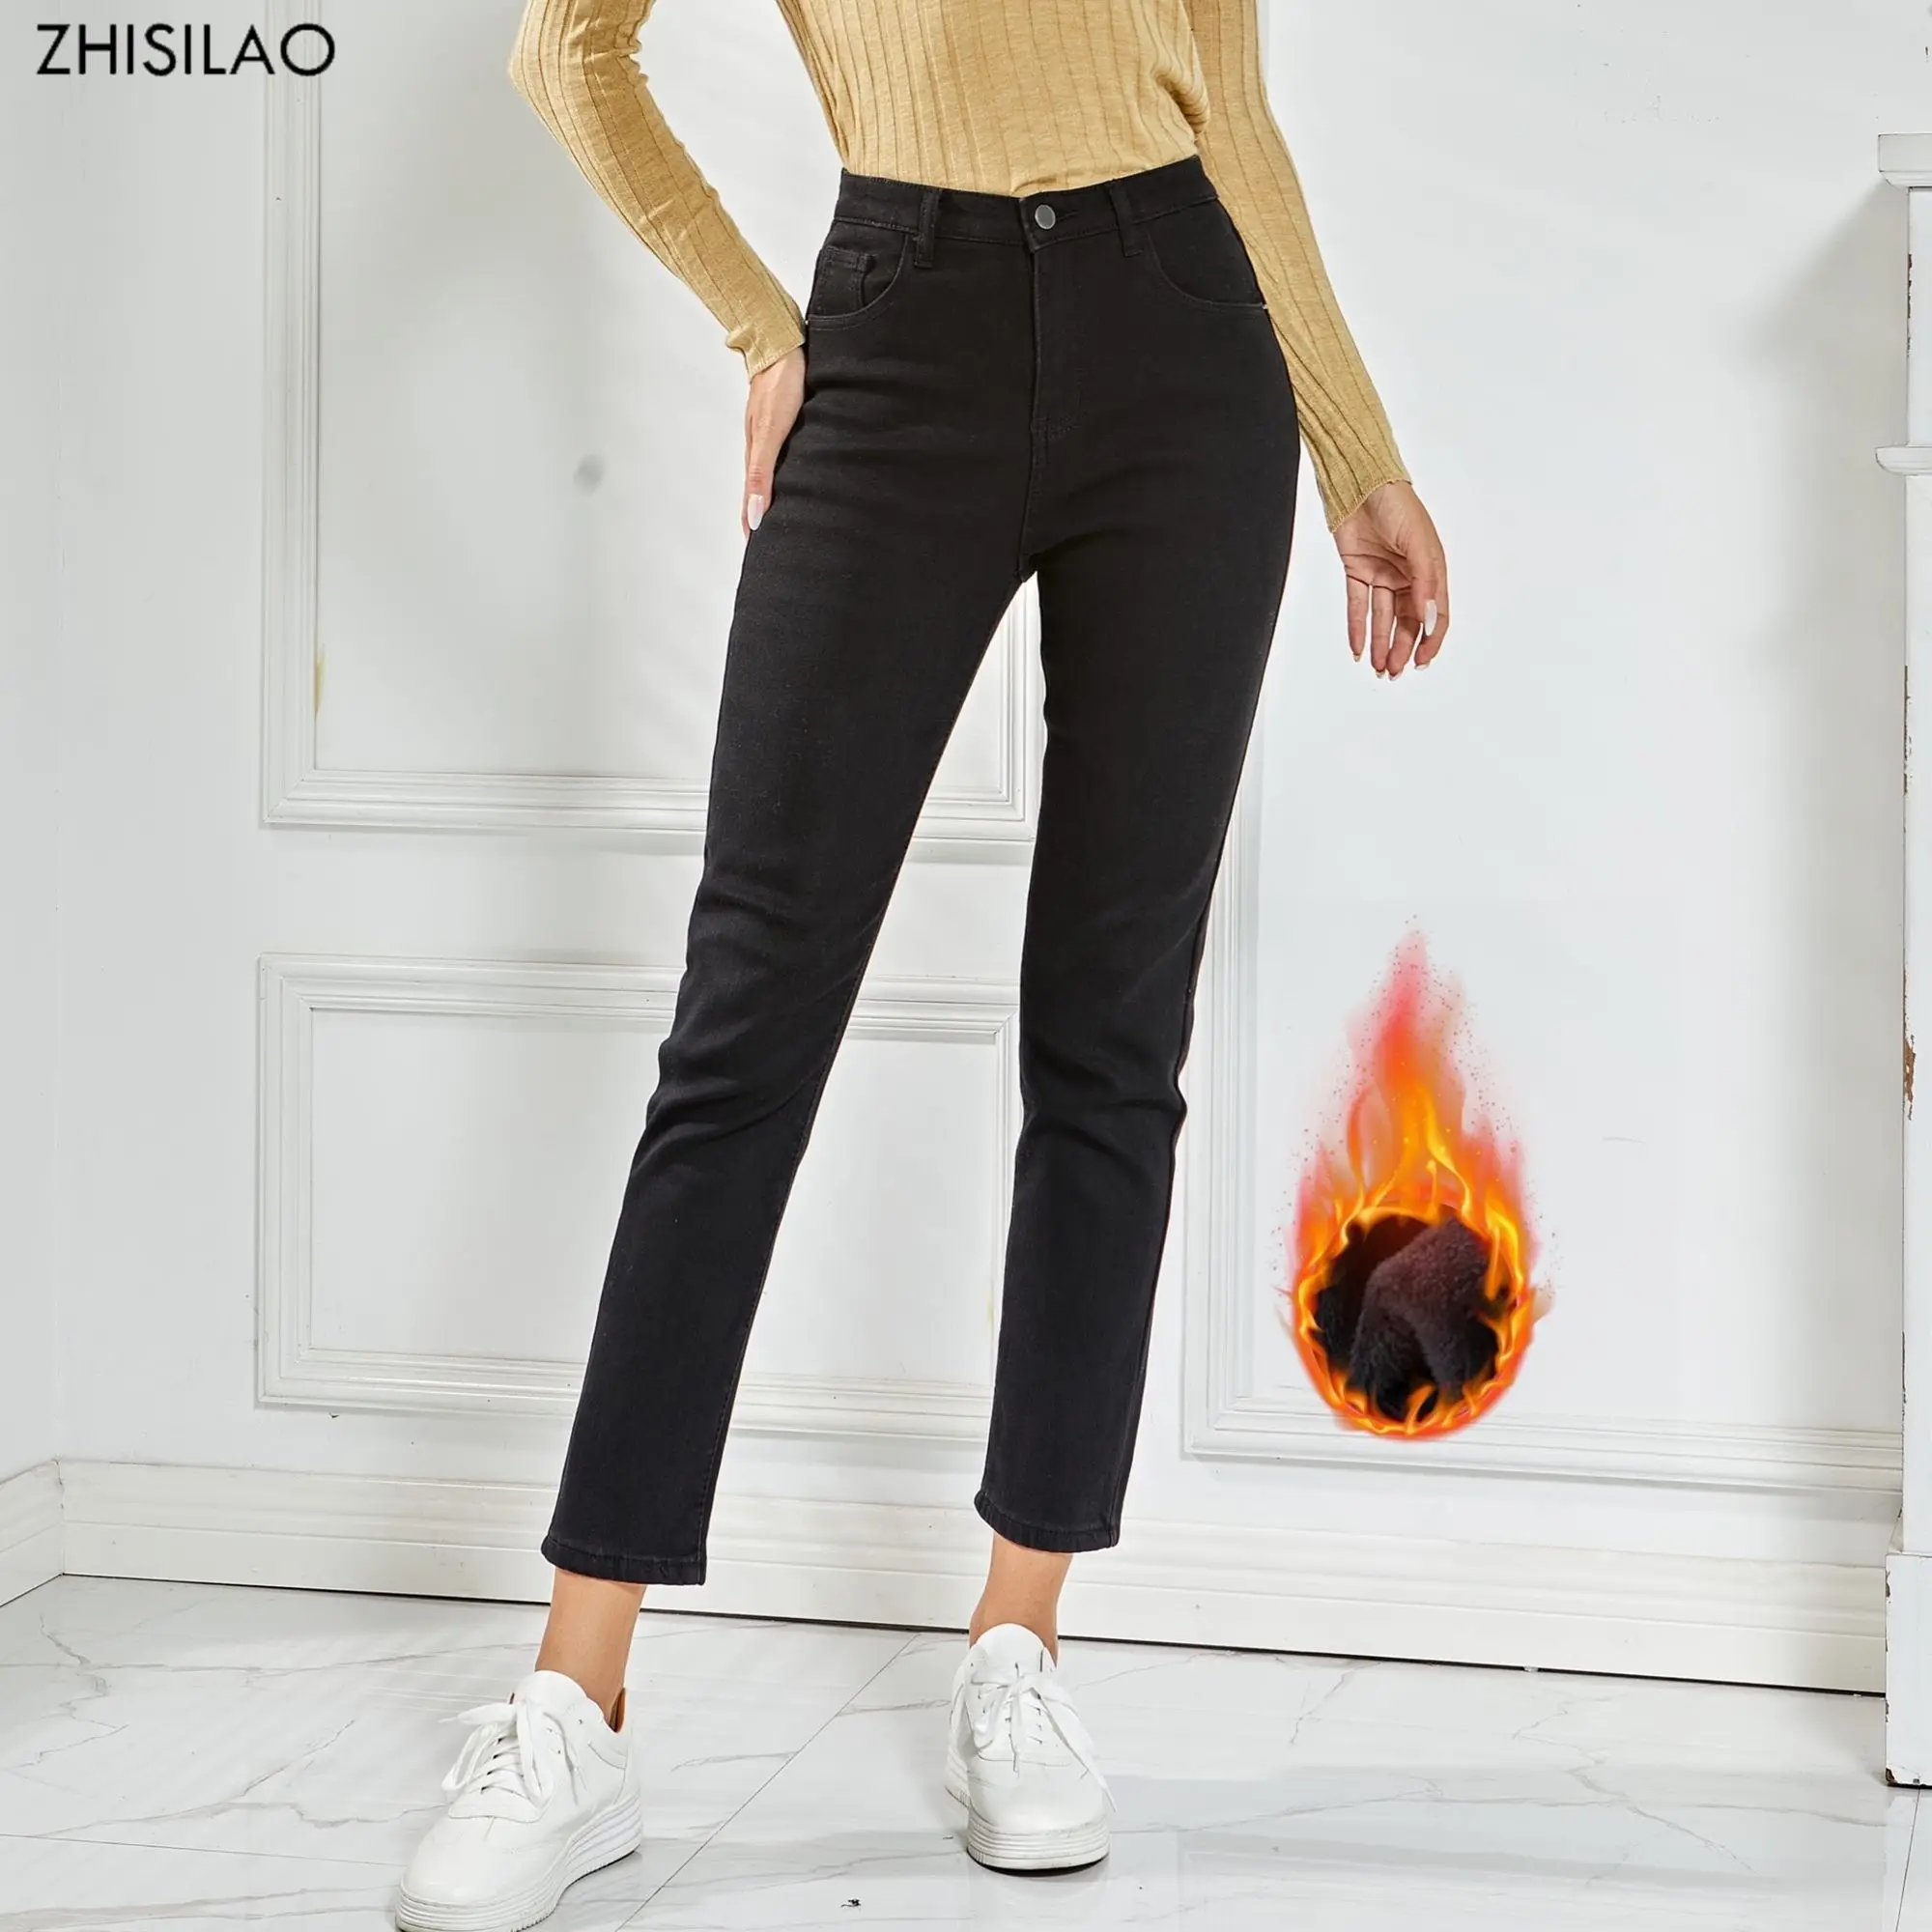 

ZHISILAO High Waist Women Jeans Winter Warm Tight Denim Pants Stretch Thicken Fleece Pencil Jeans Trousers for Women Winter 2022